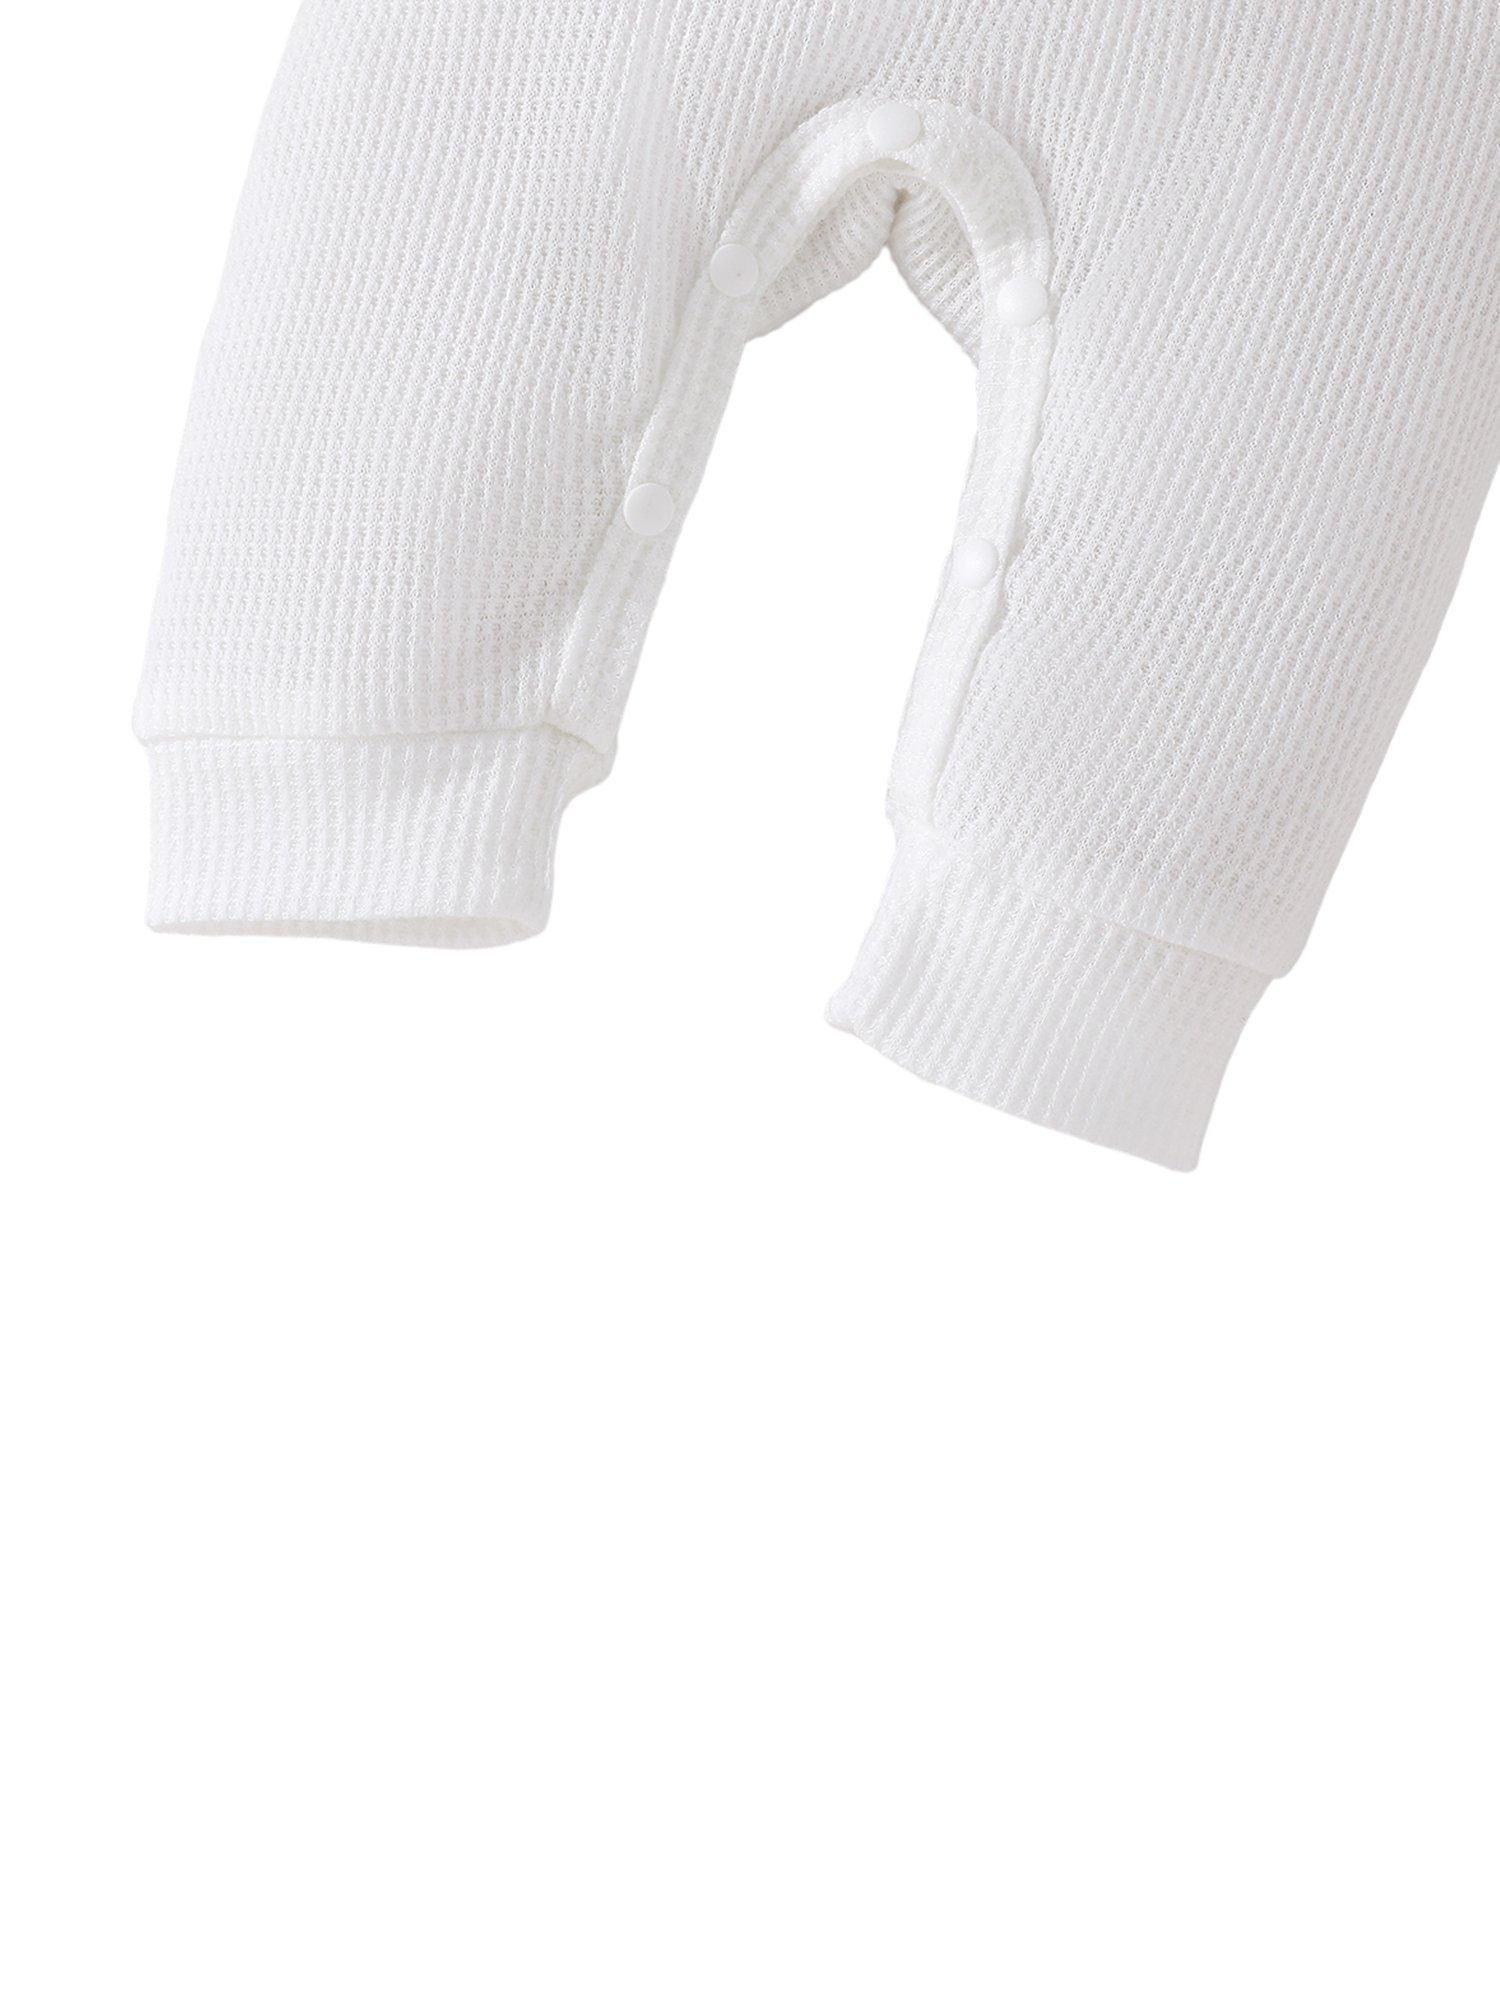 LAPA Strampler Süßes Langarm Strampler Khaki Set Baby mit kontrastfarben aus Waffelstoff